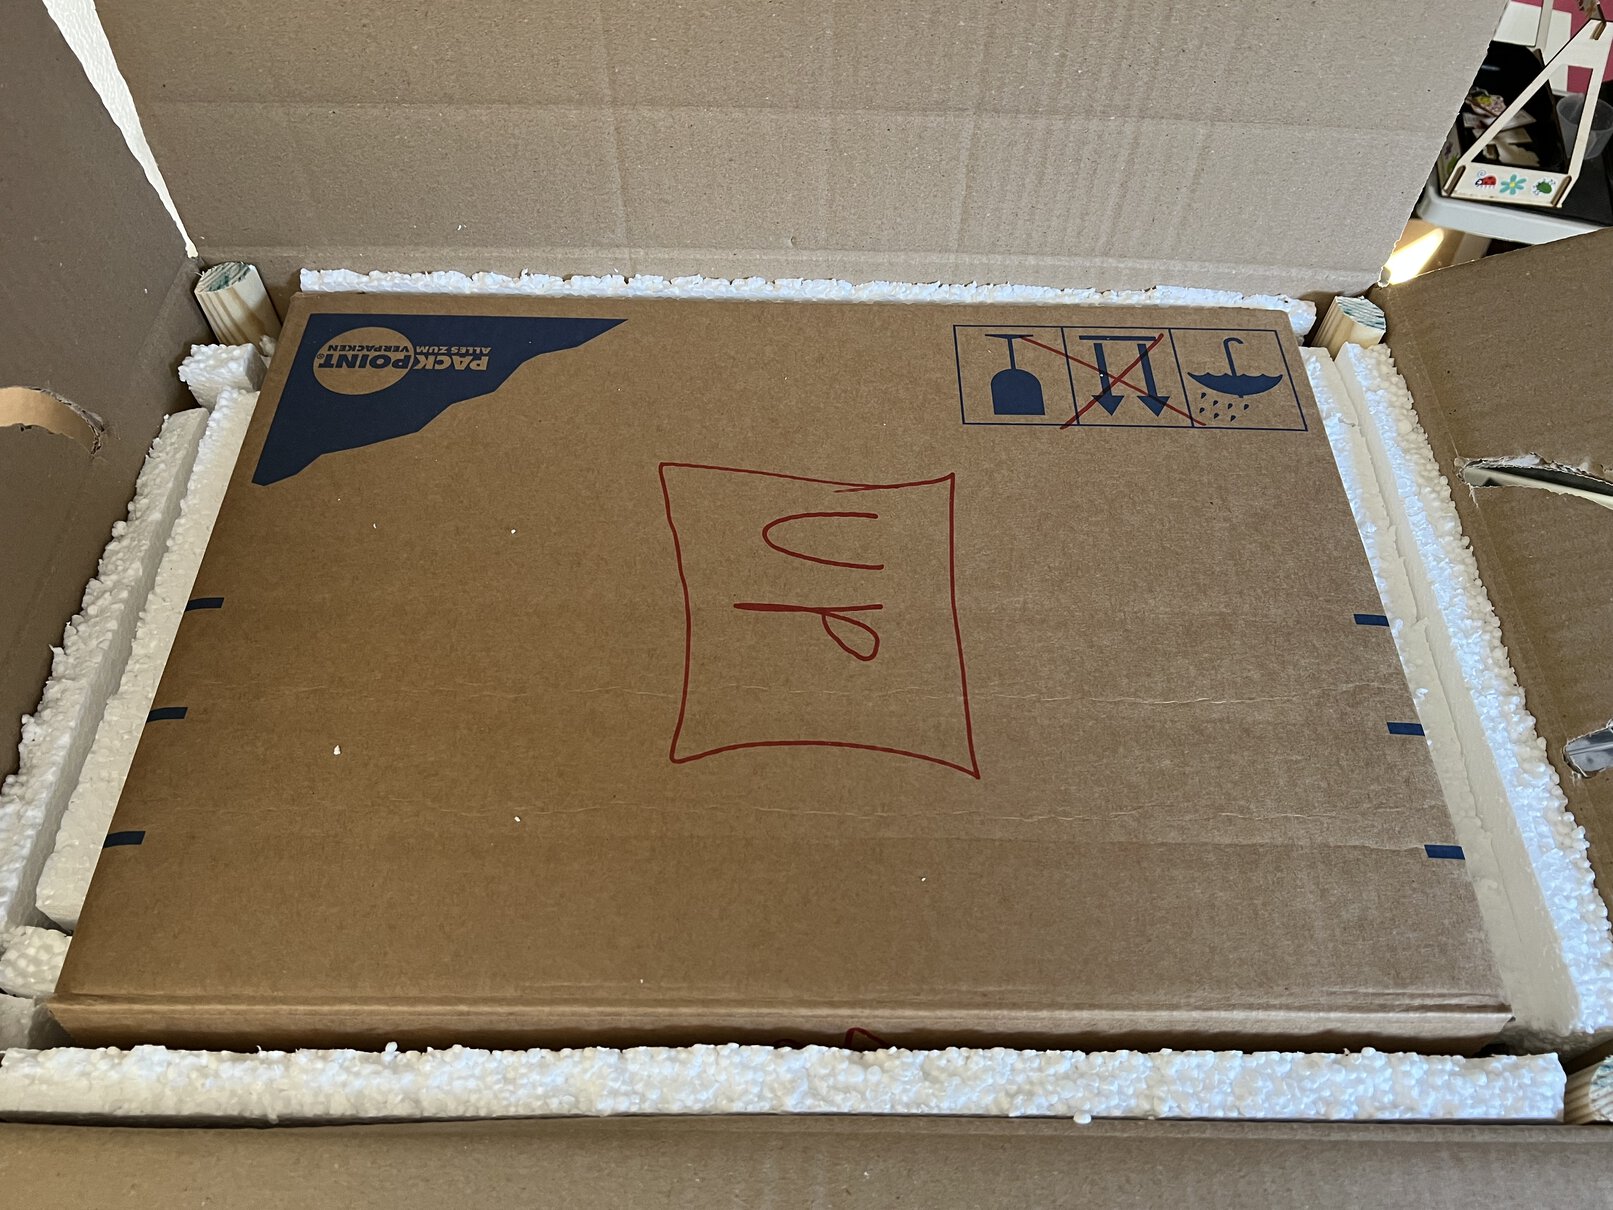 Box within a box